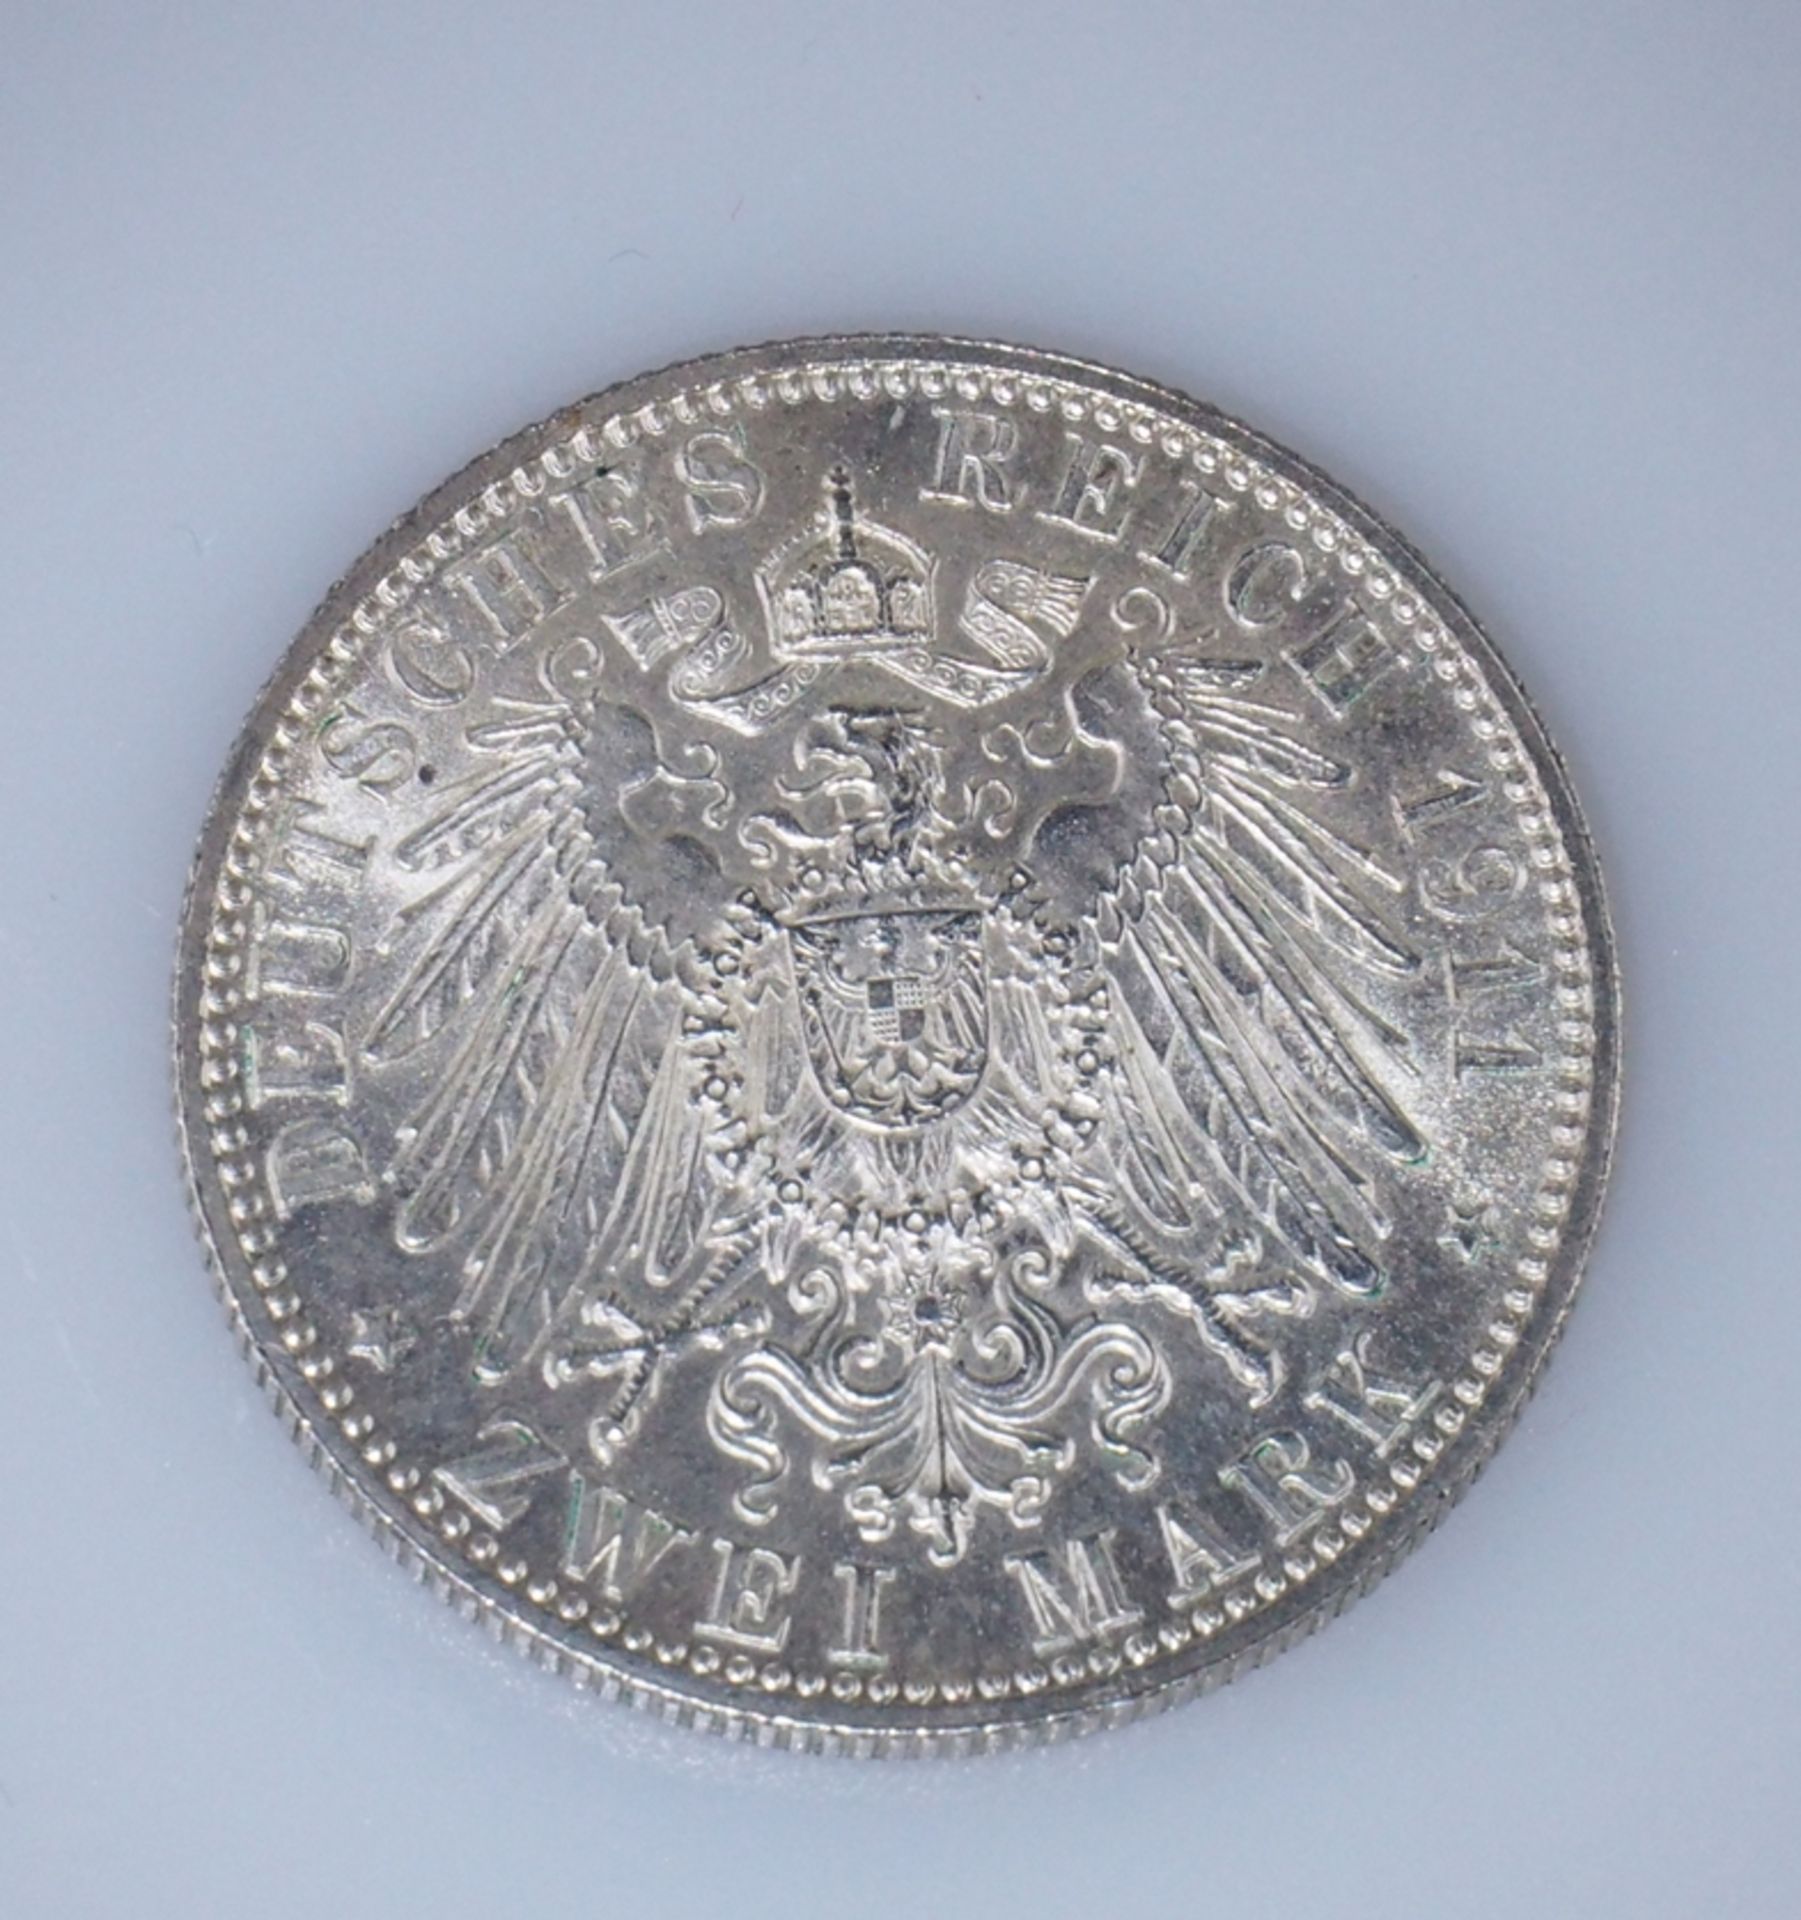 Bayern. Zwei Mark. 1911. J 48 - Image 2 of 2